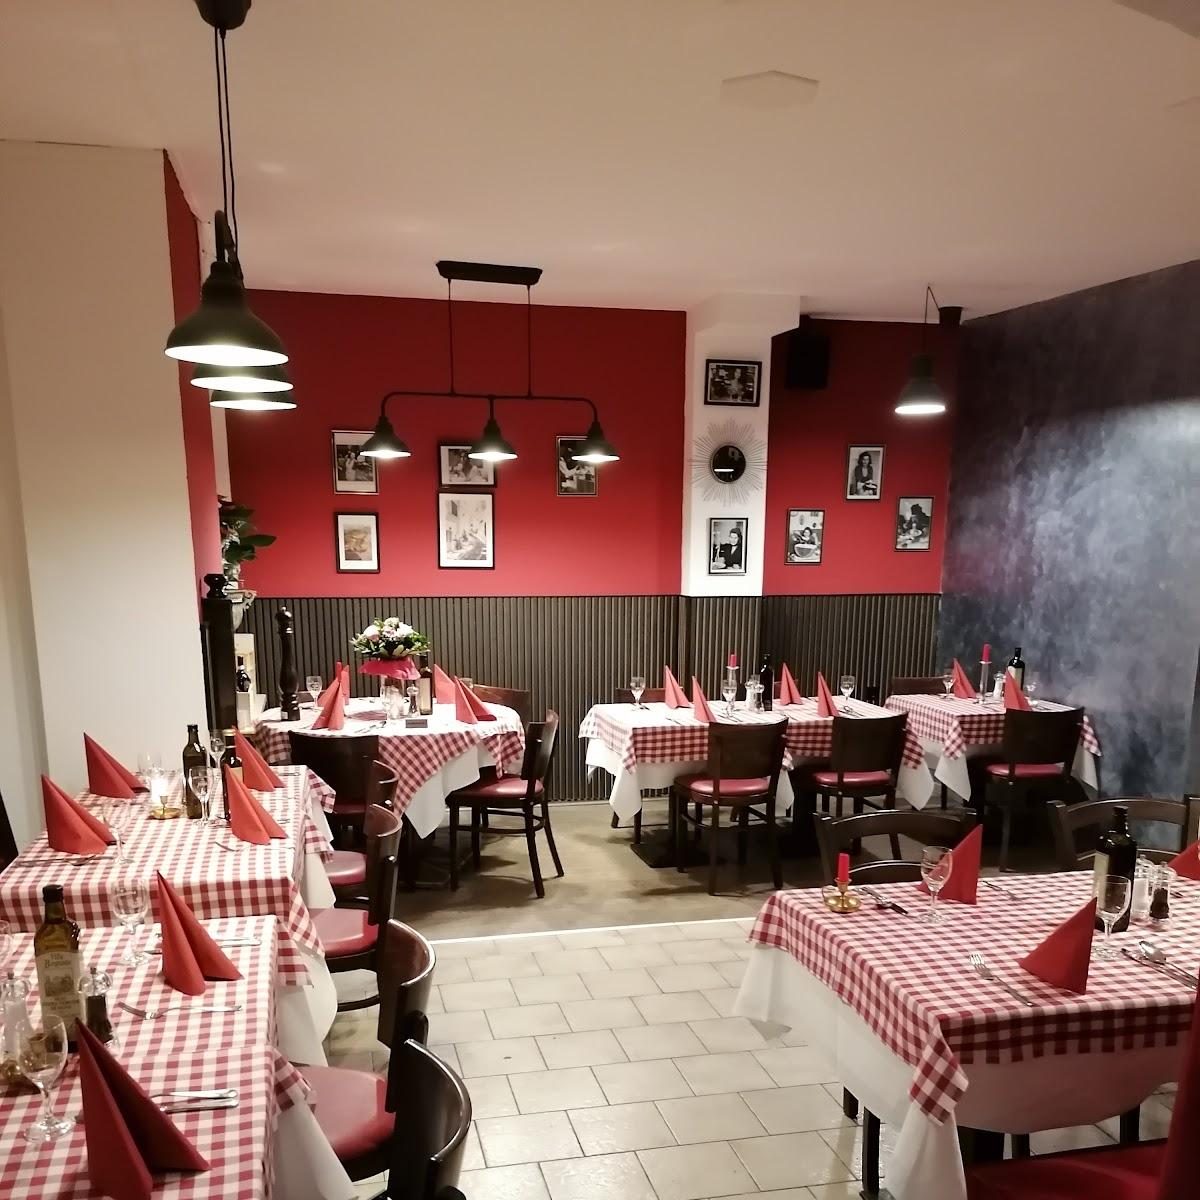 Restaurant "Trattoria Viktoria" in Berlin